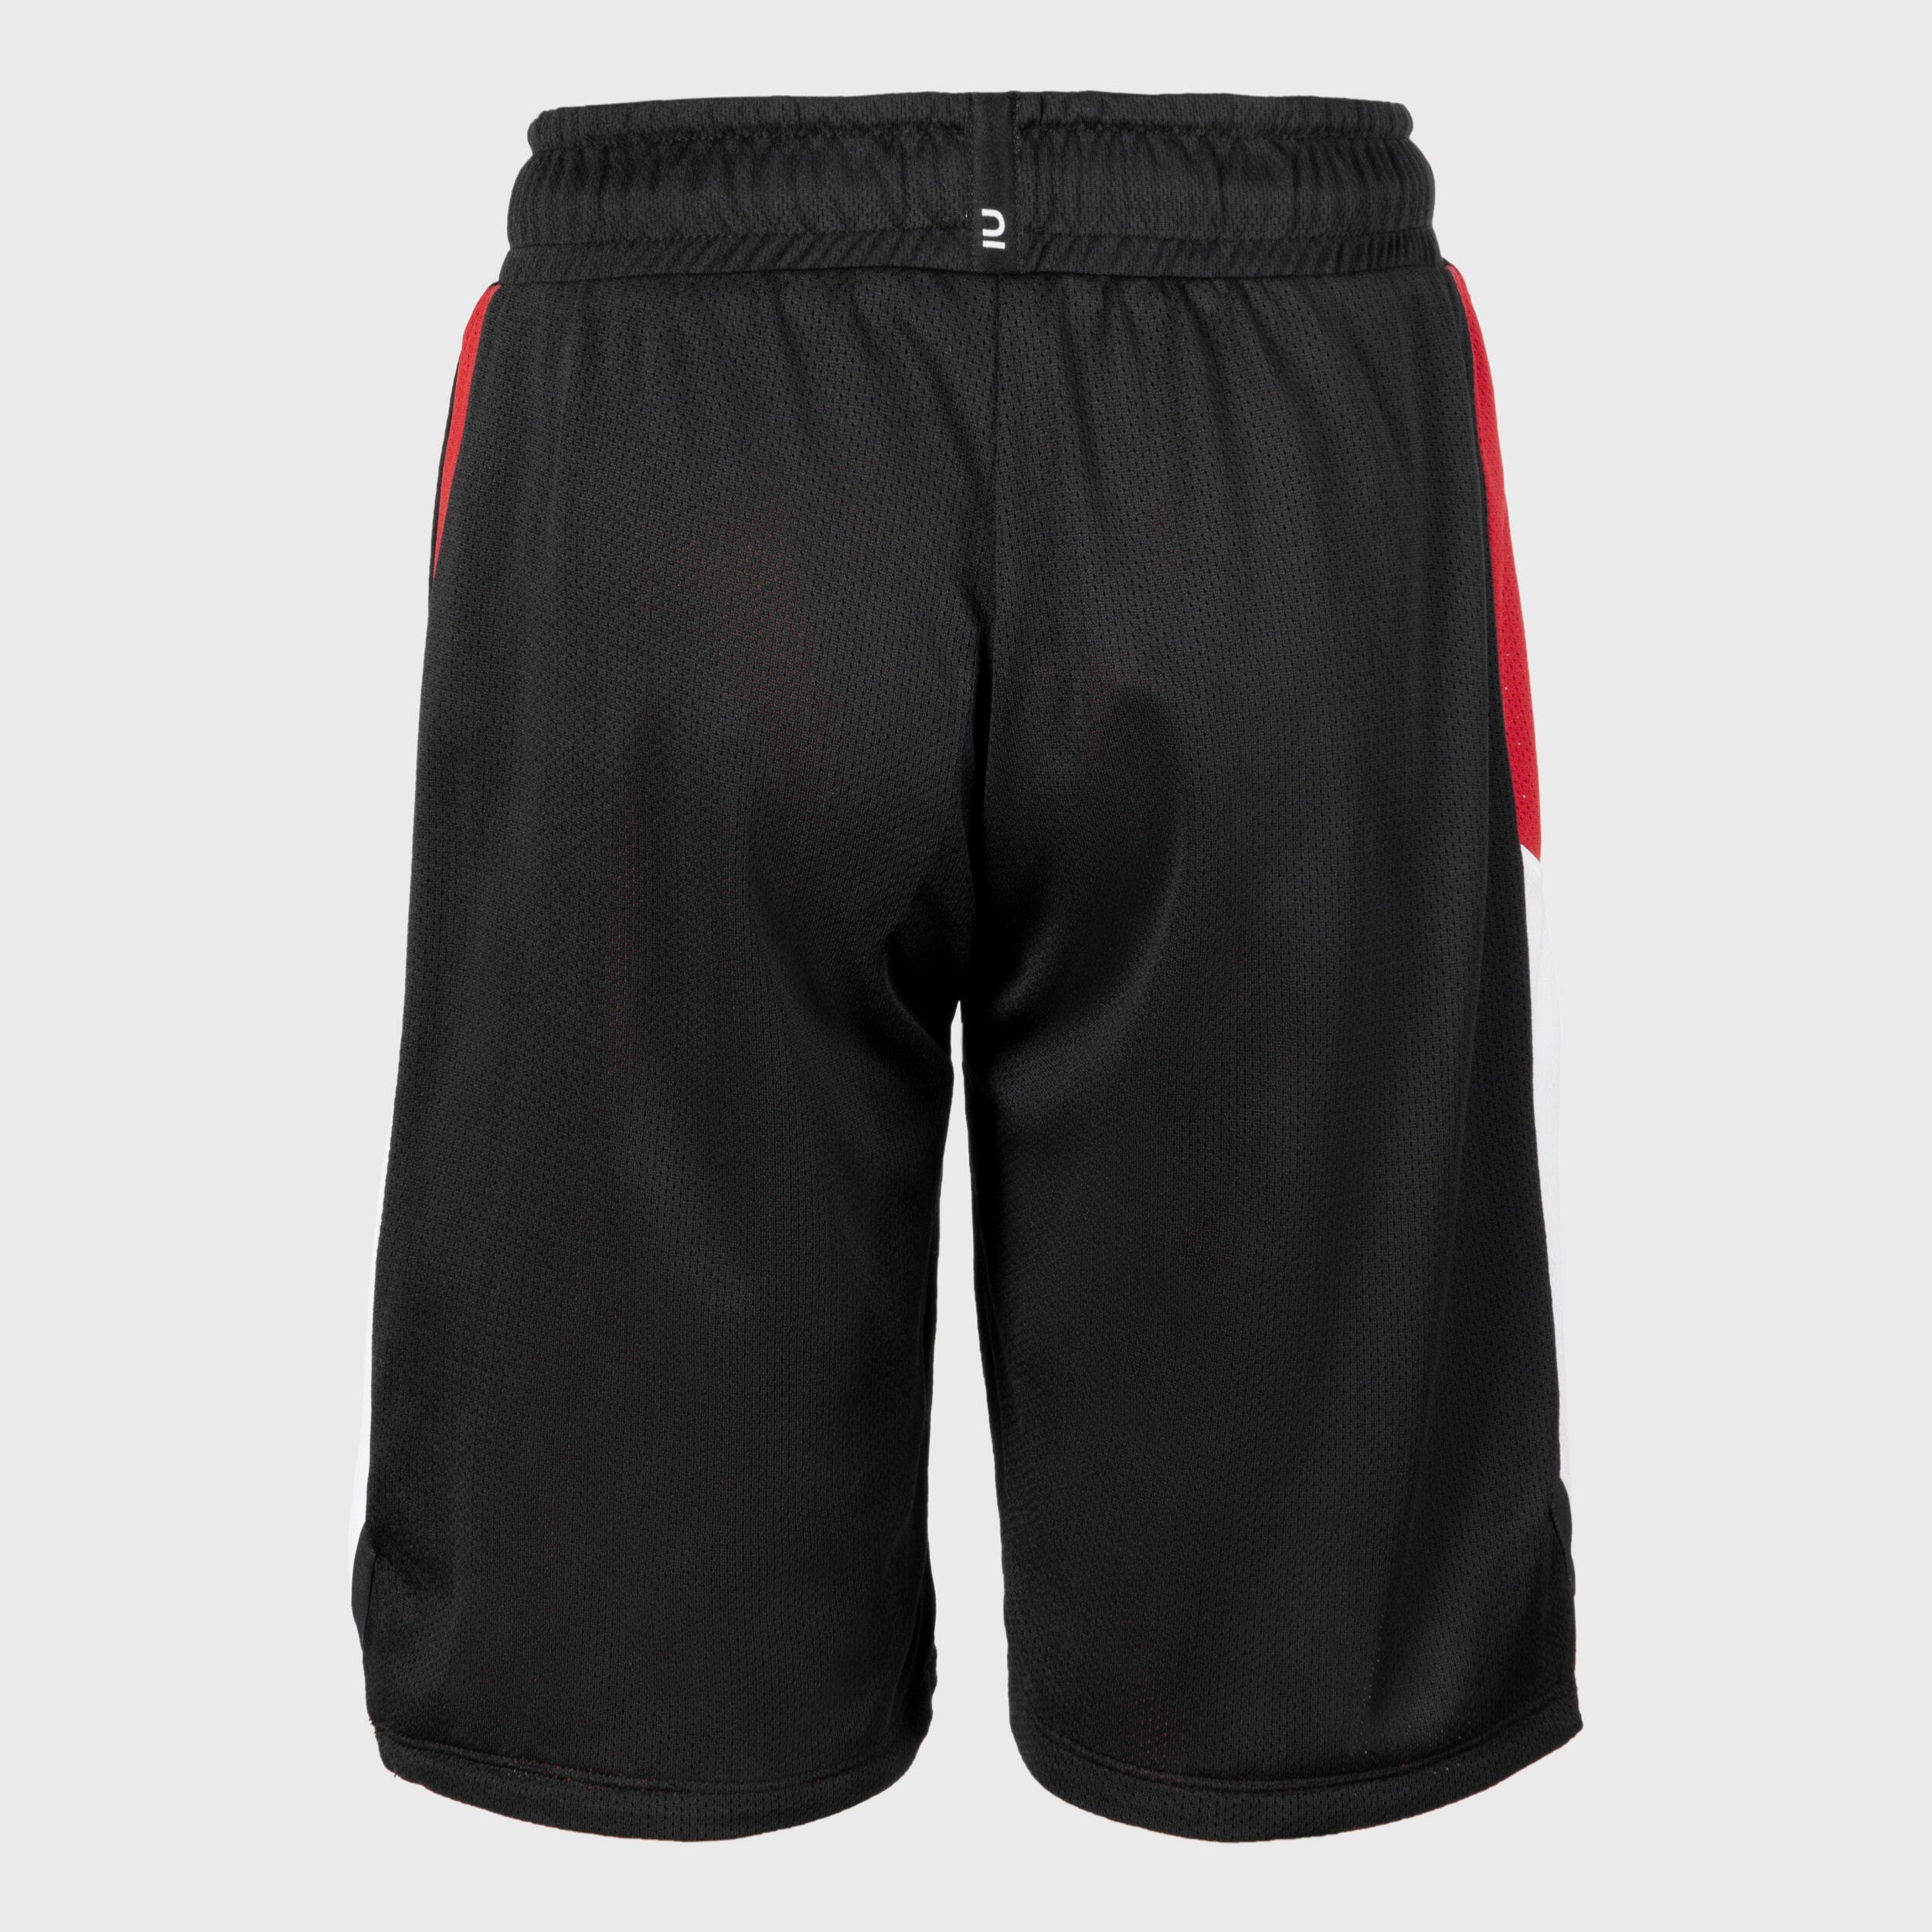 Kids' Reversible Basketball Shorts SH500R - Black/Red 10/11